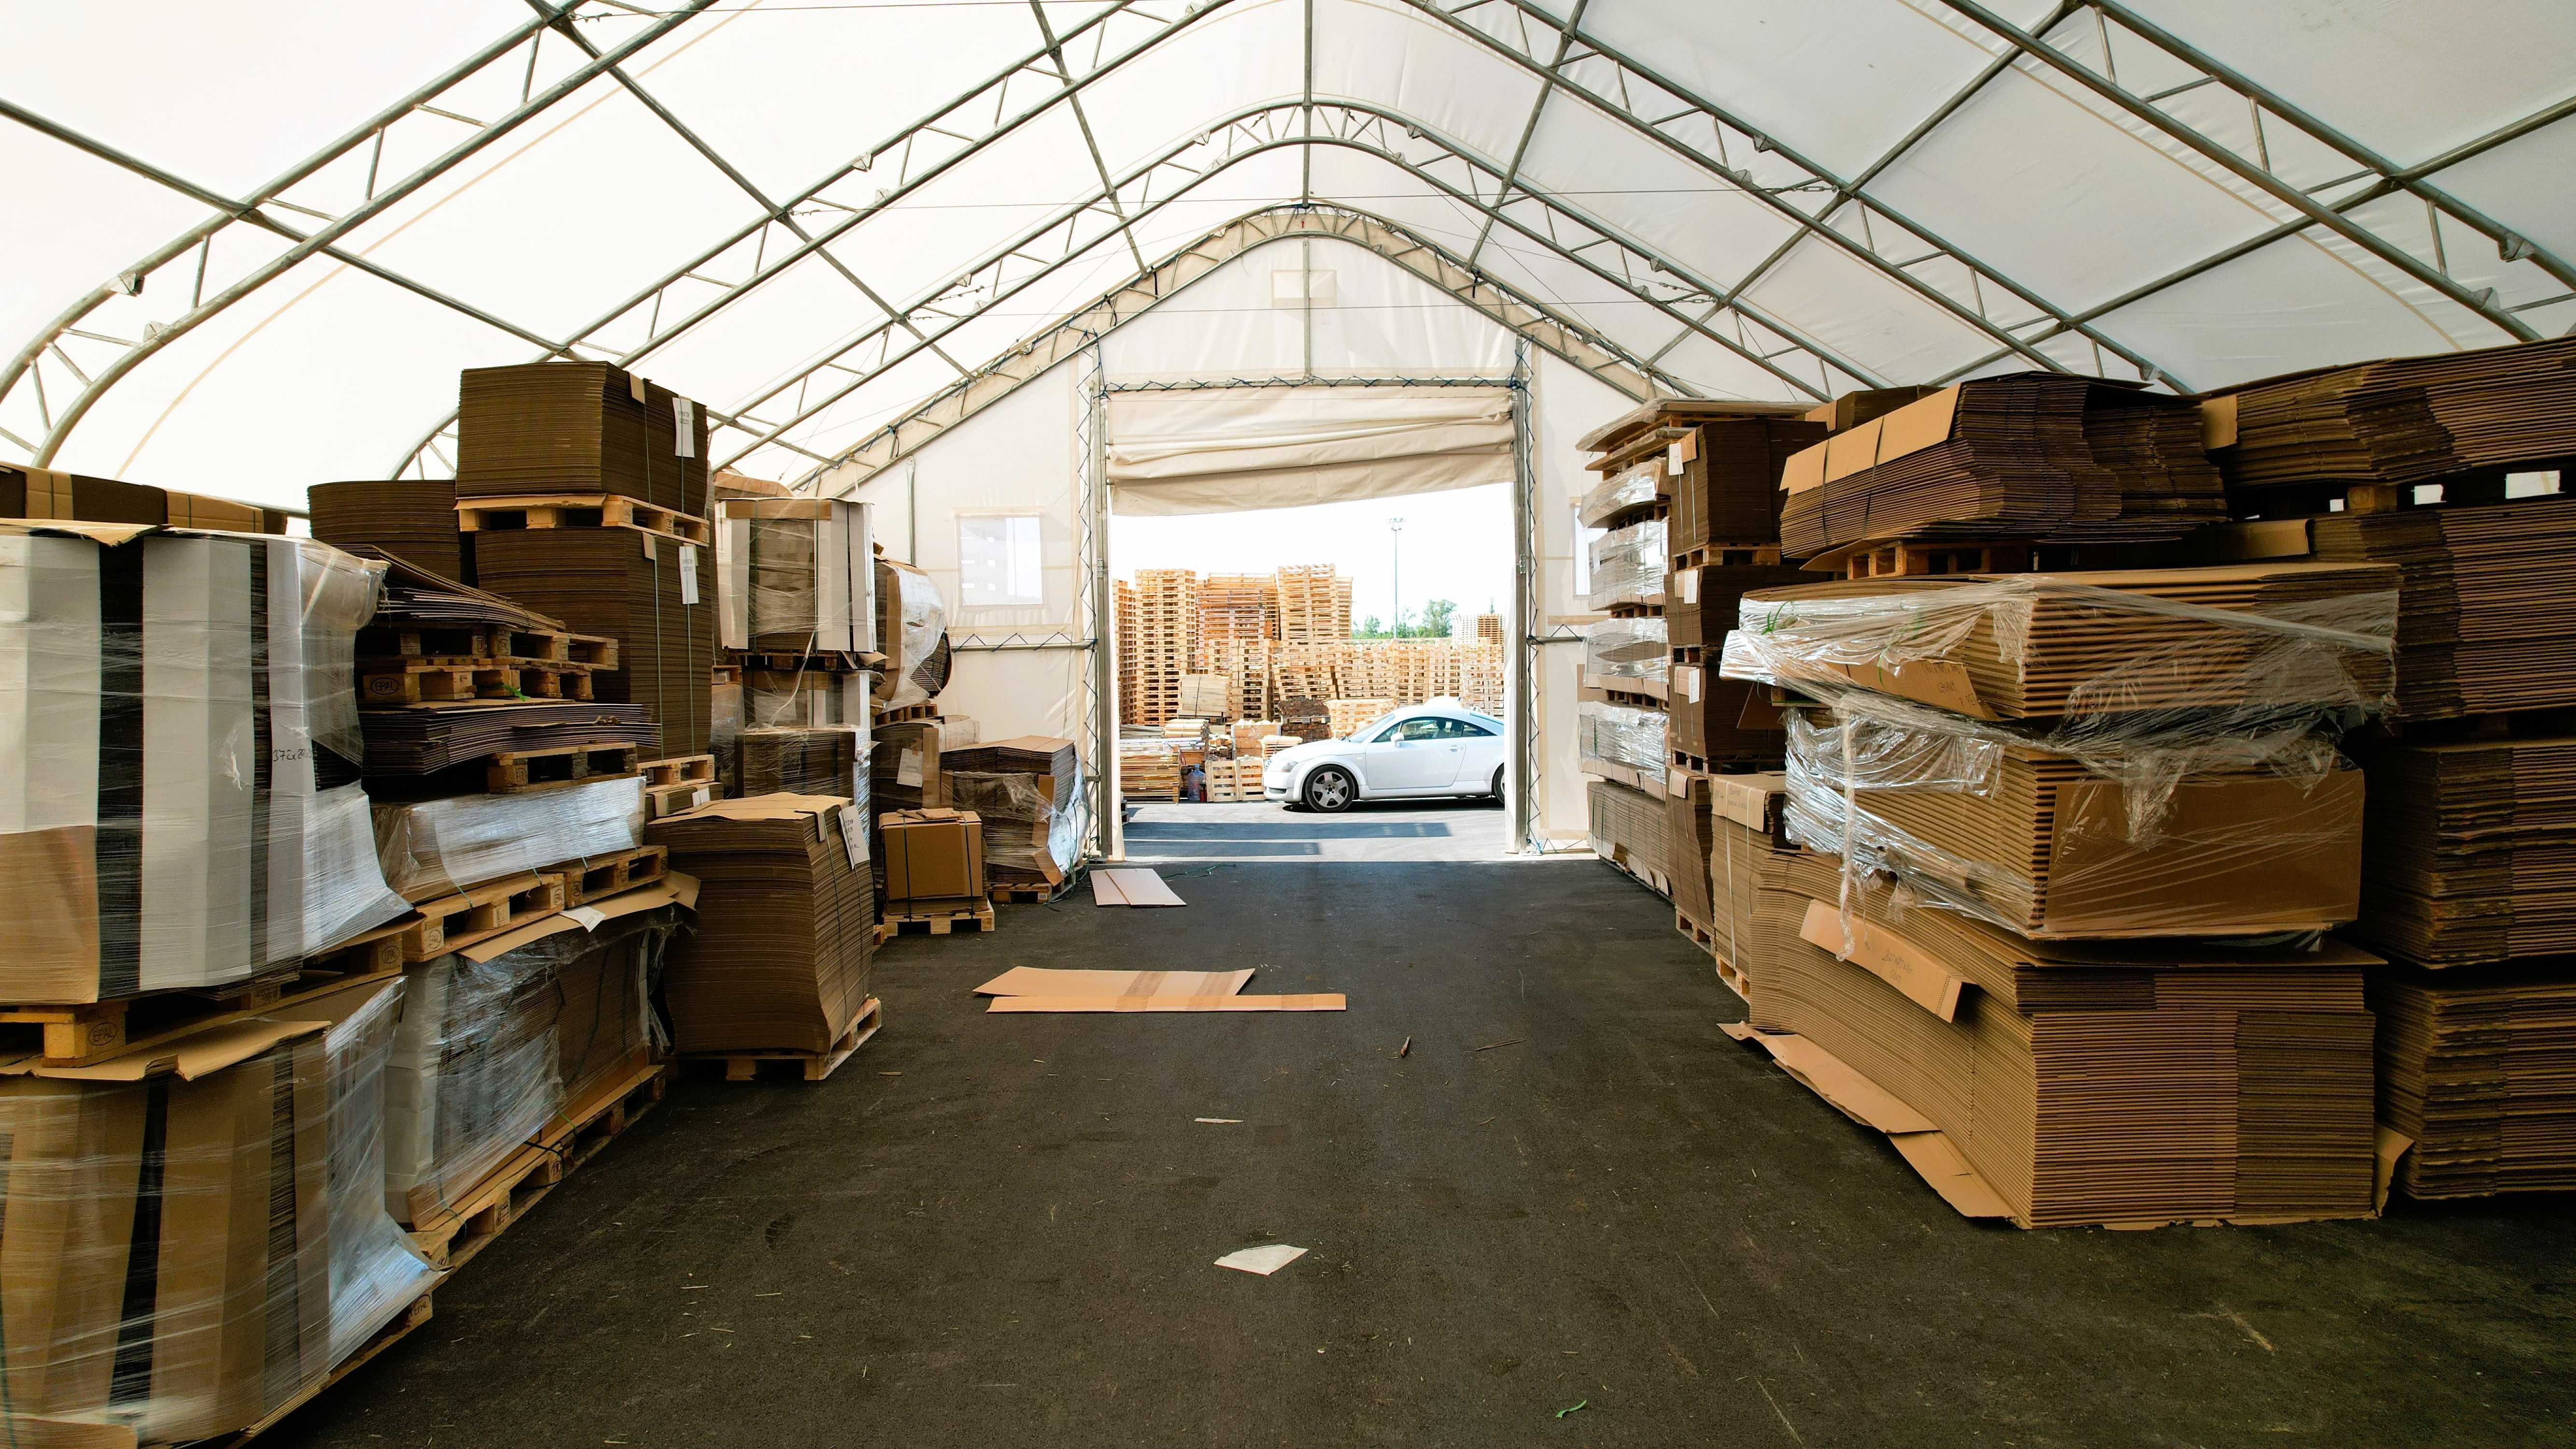 Magazyn 12x12x6,4x4.1m NOWA HALA NAMIOTOWA namiot magazynowa garaż